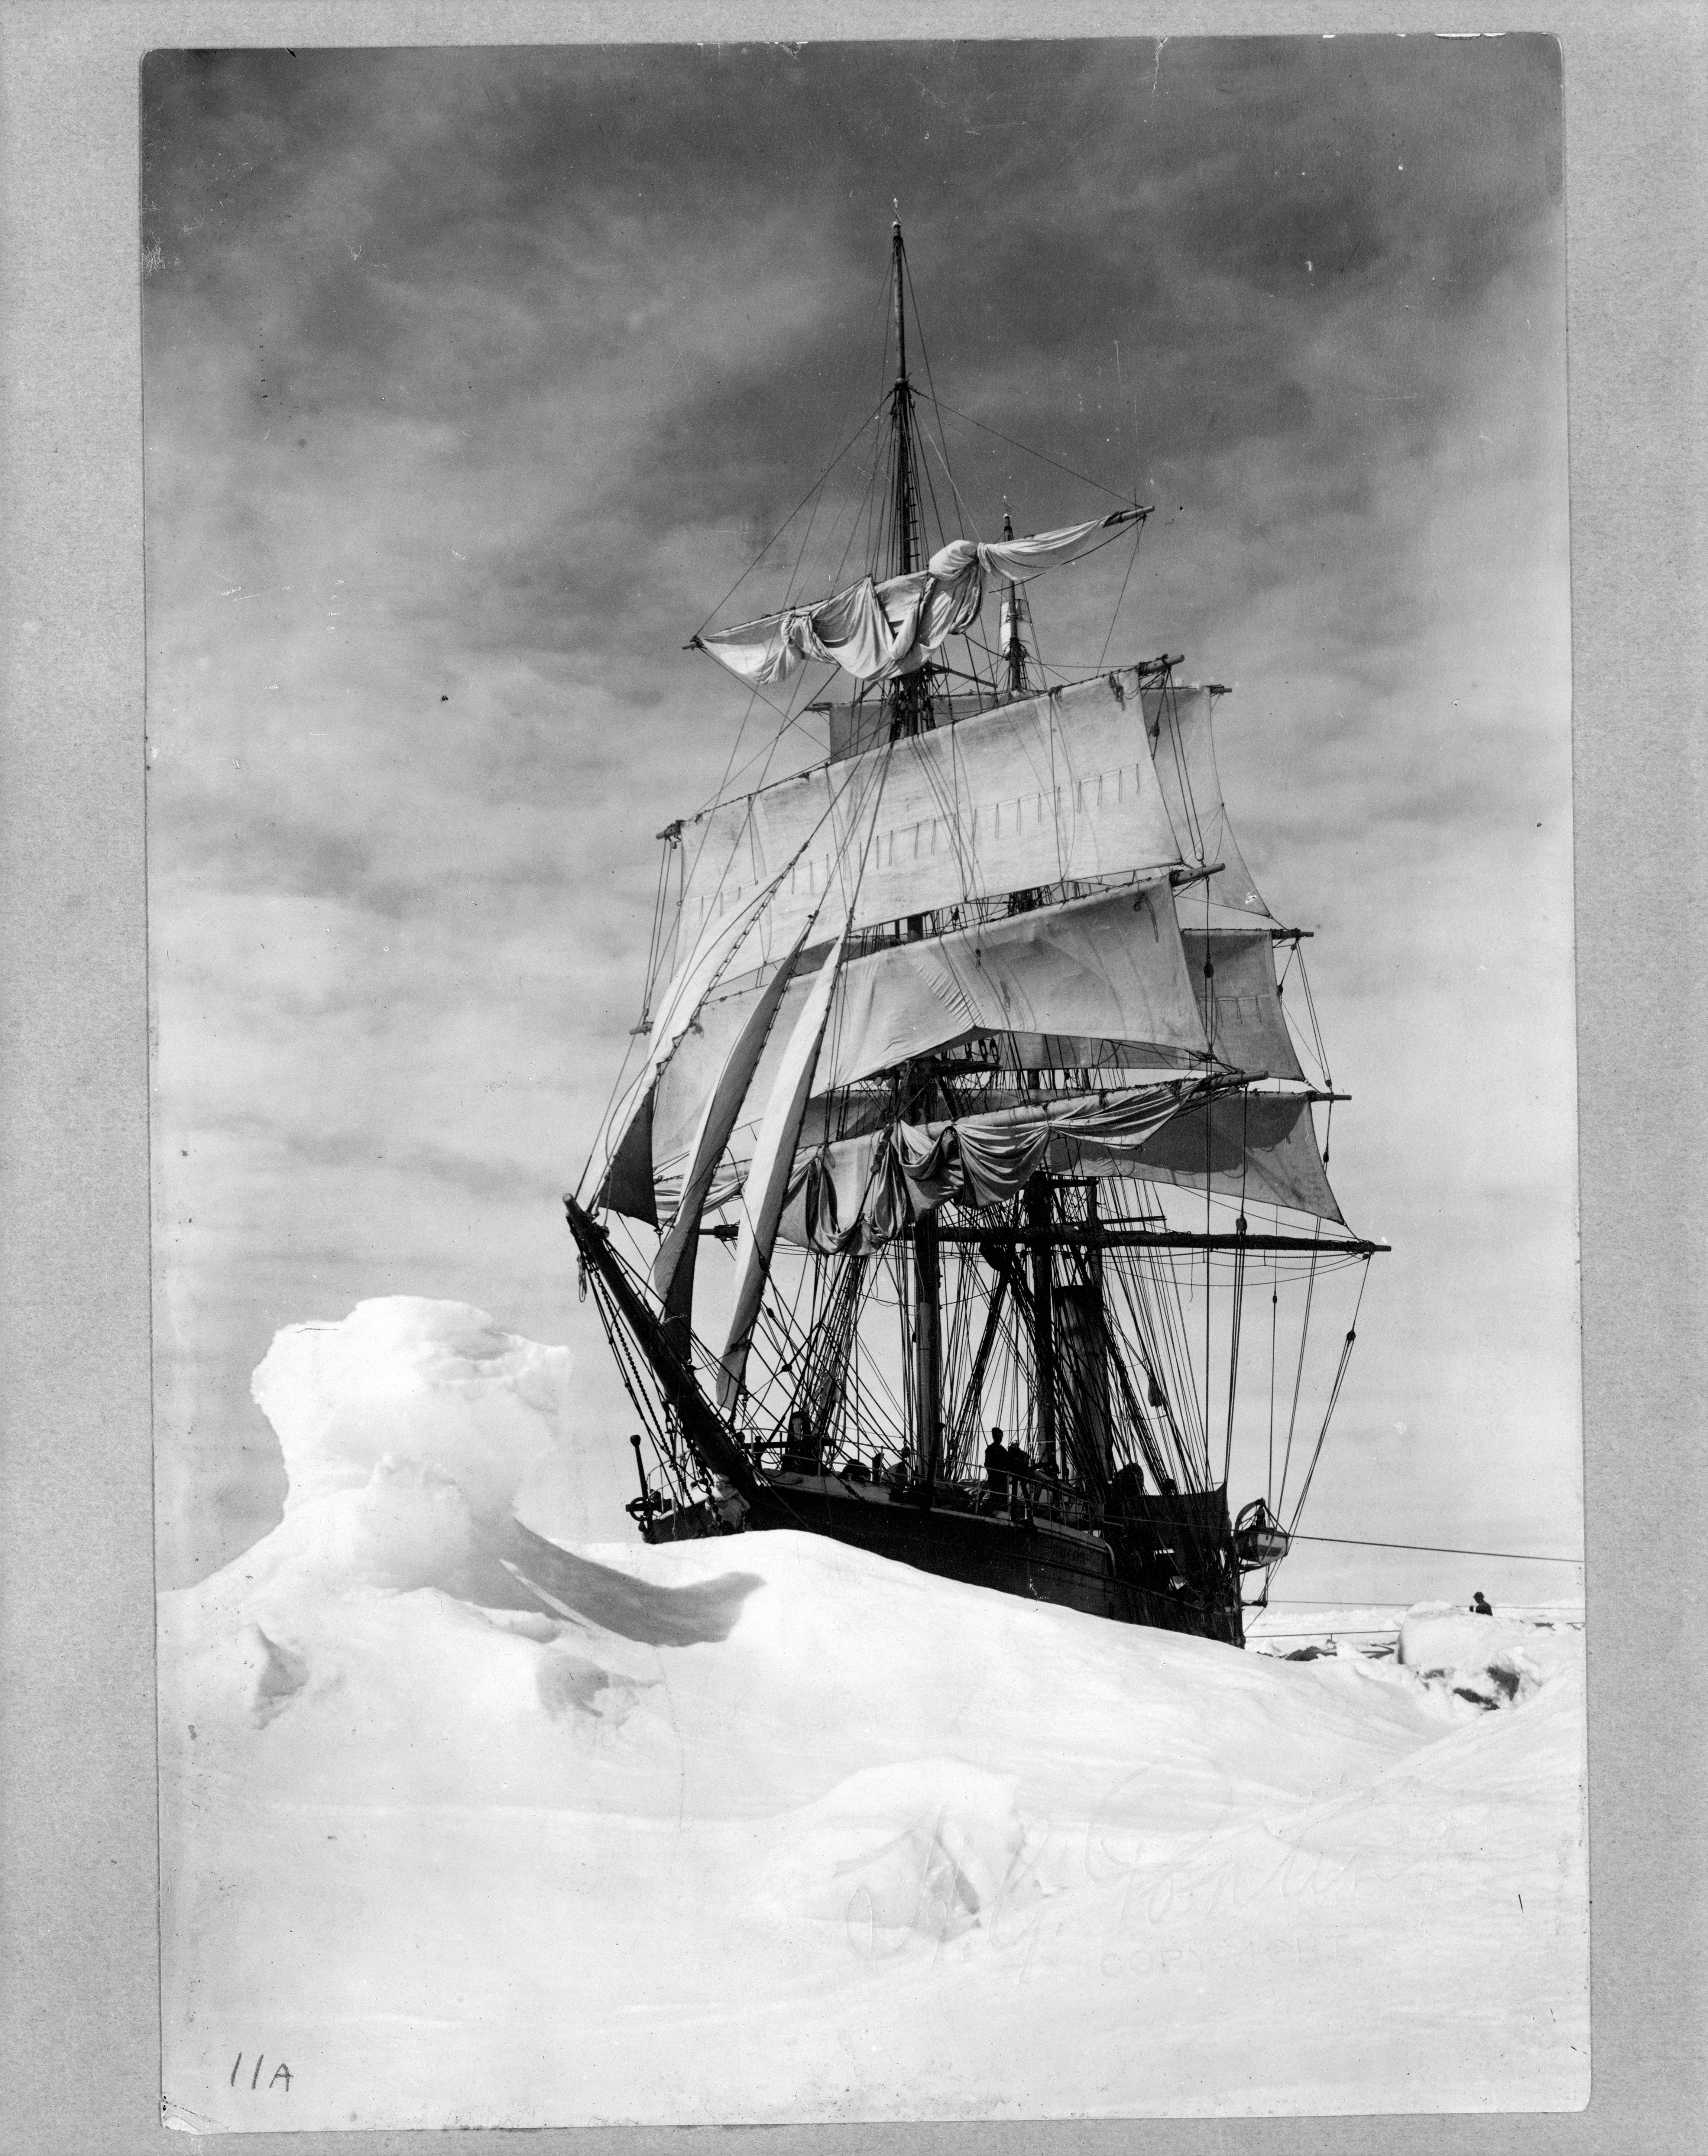 The <em>Terra Nova</em> ship is locked in the ice pack during winter.